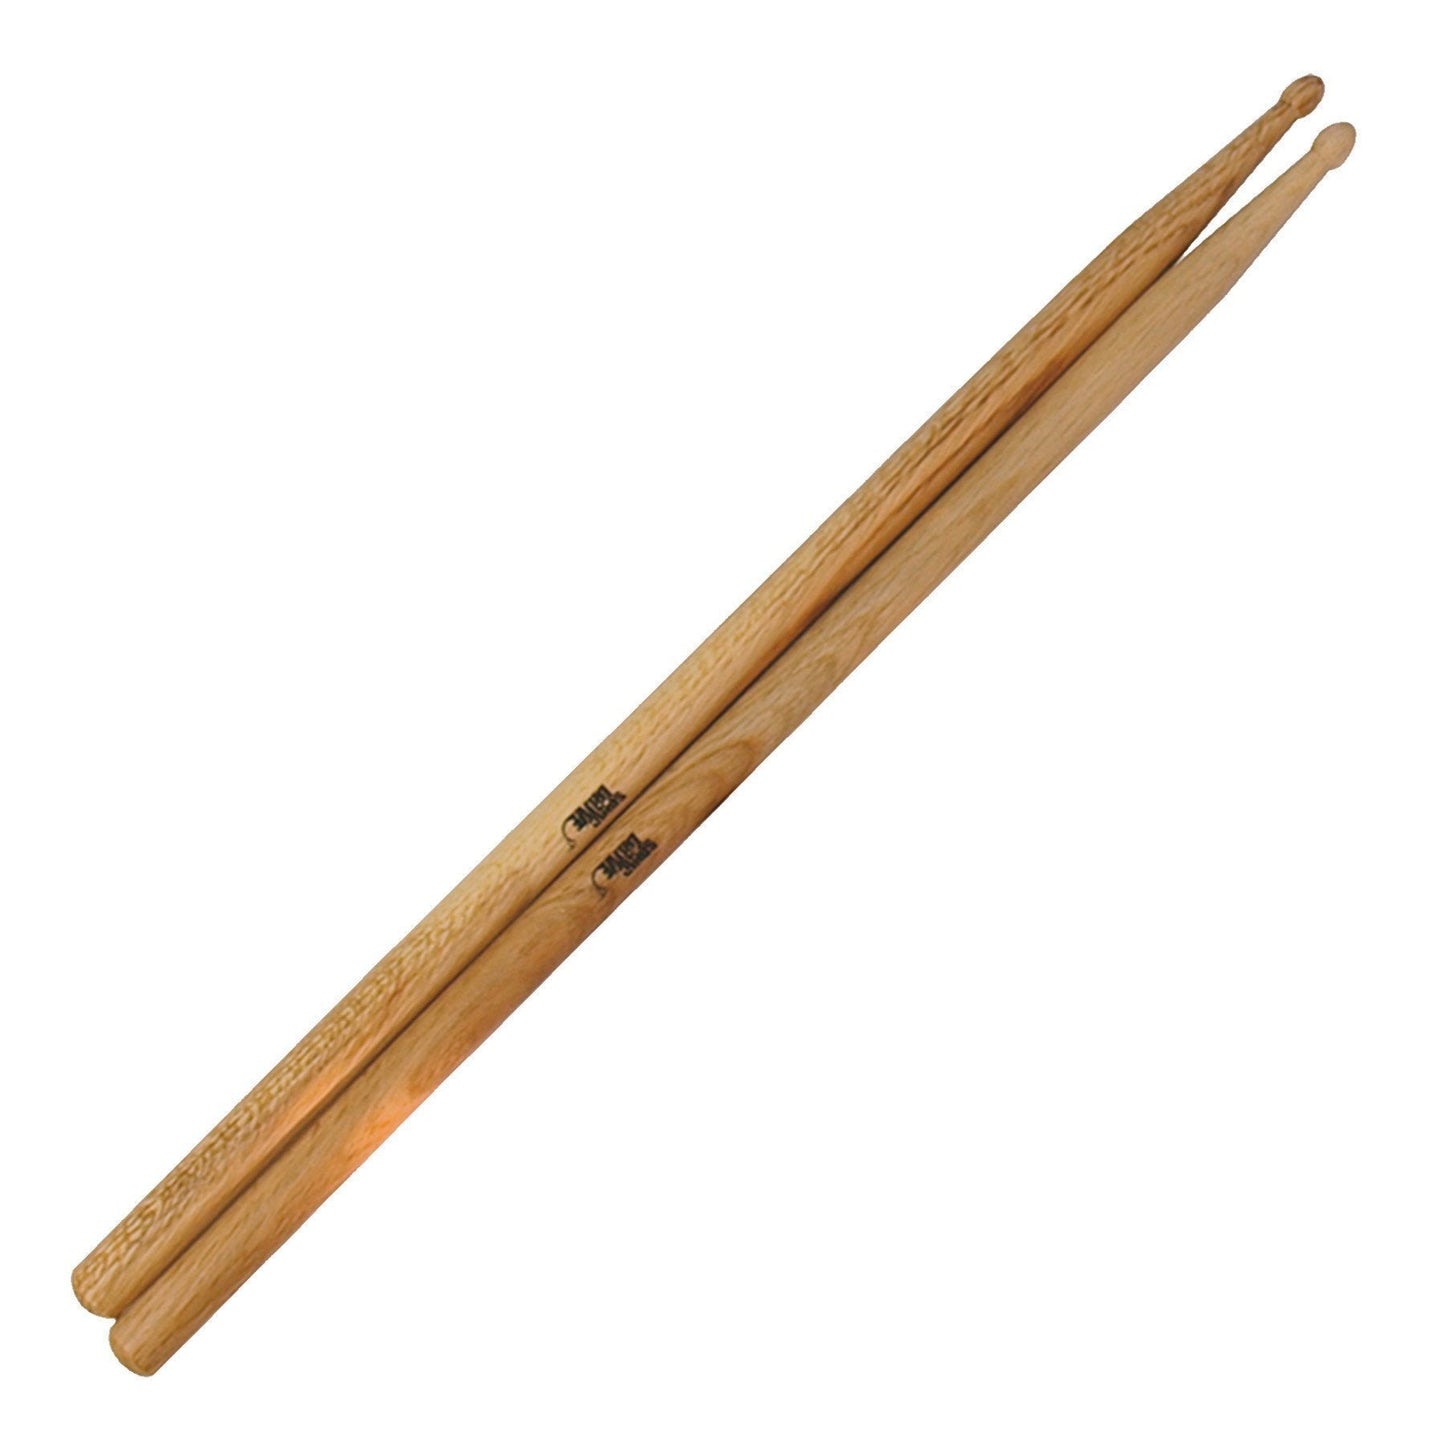 Sonic Drive 5B Wood Tip Drumsticks